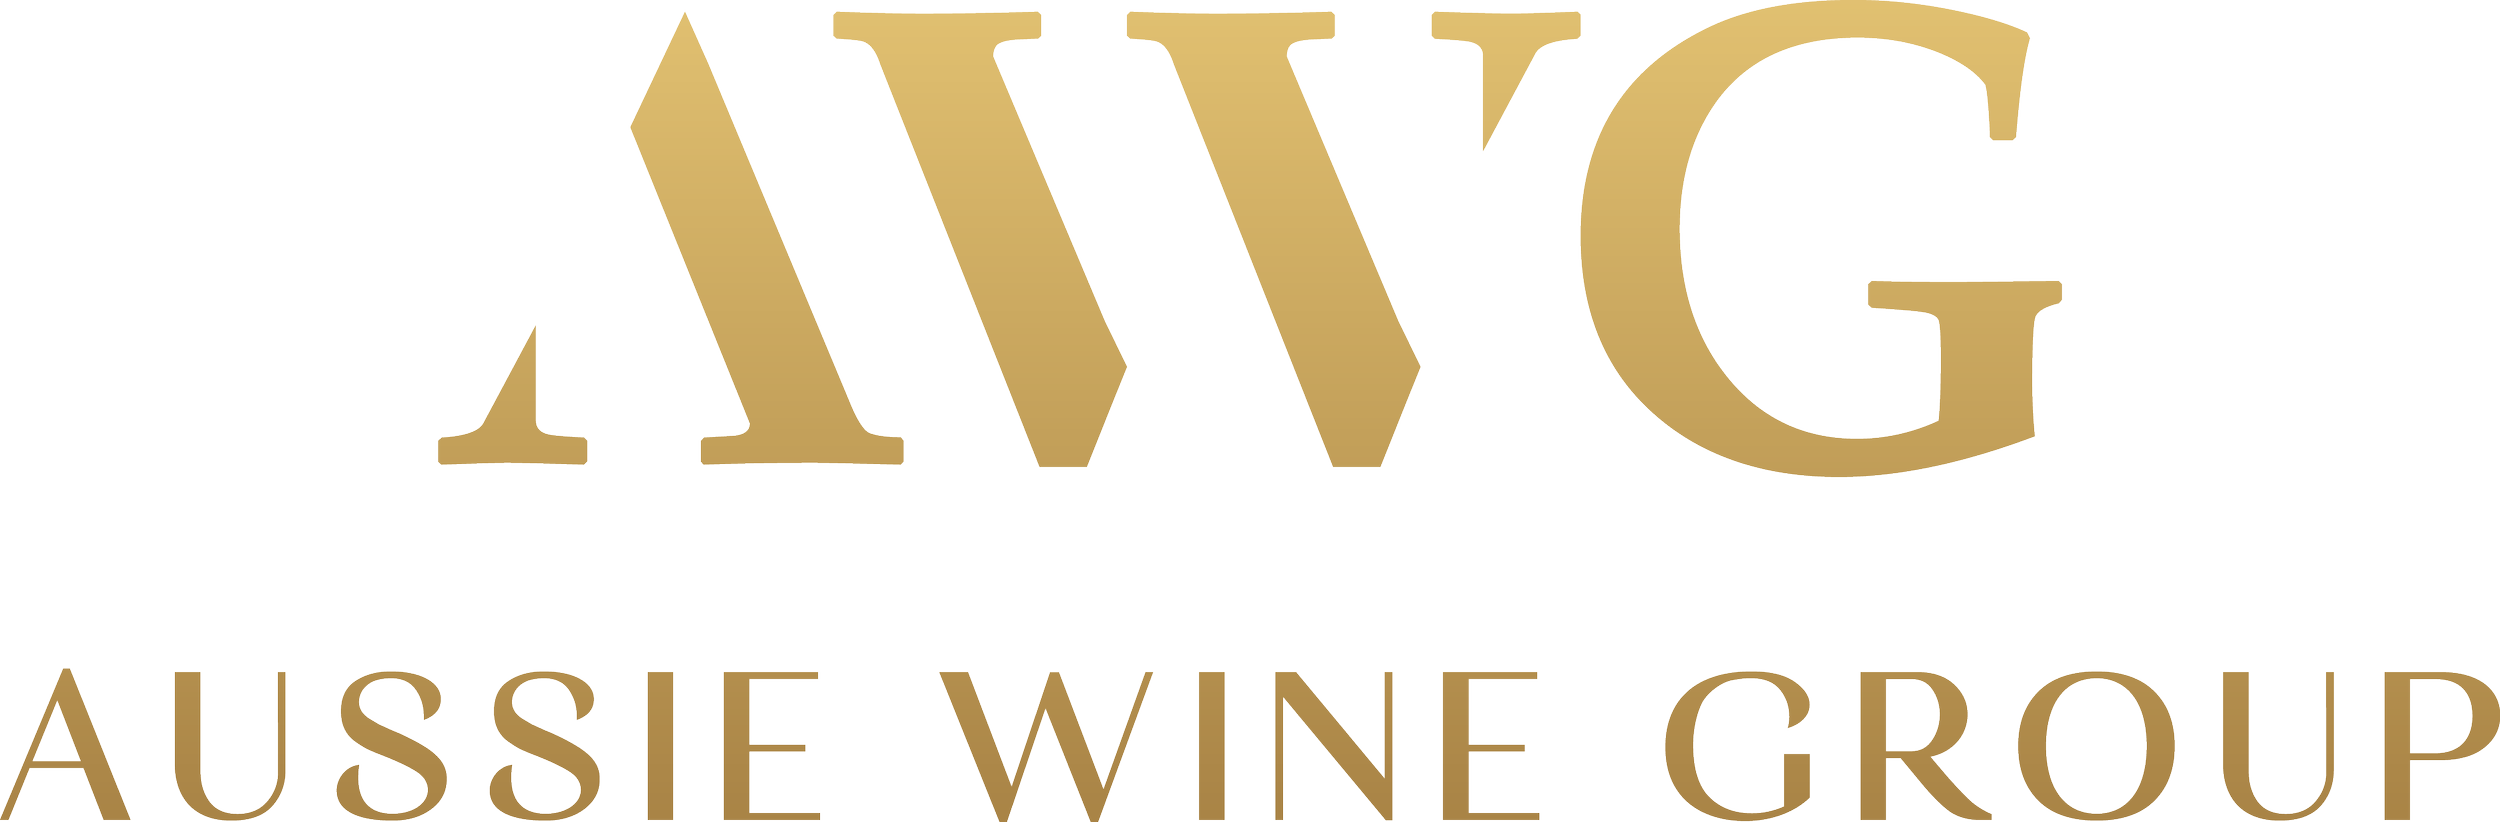 Aussie Wine Group.png